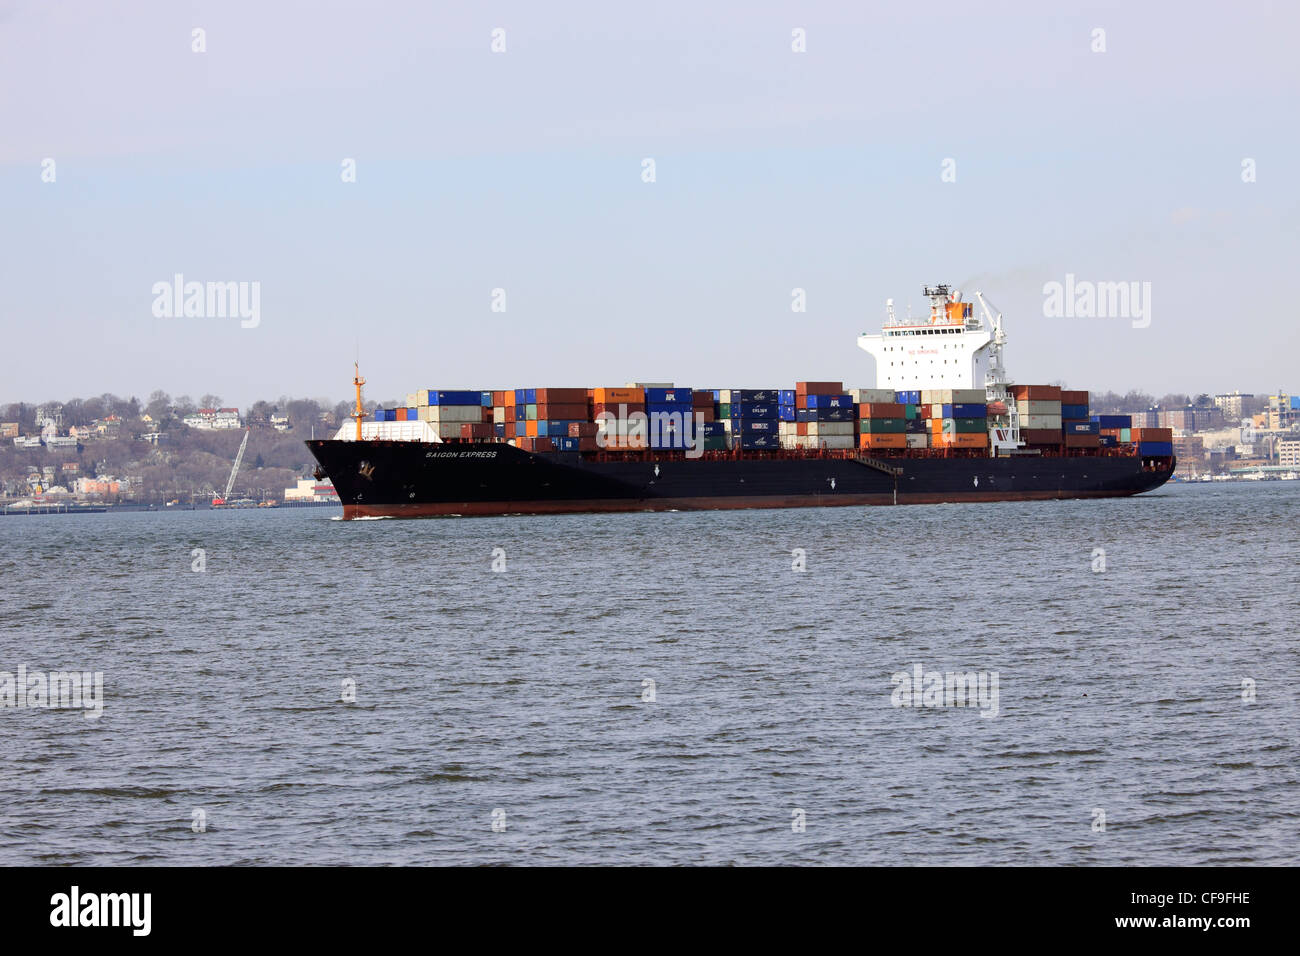 The Saigon Express container / cargo ship based in Hong Kong in New York harbor Stock Photo